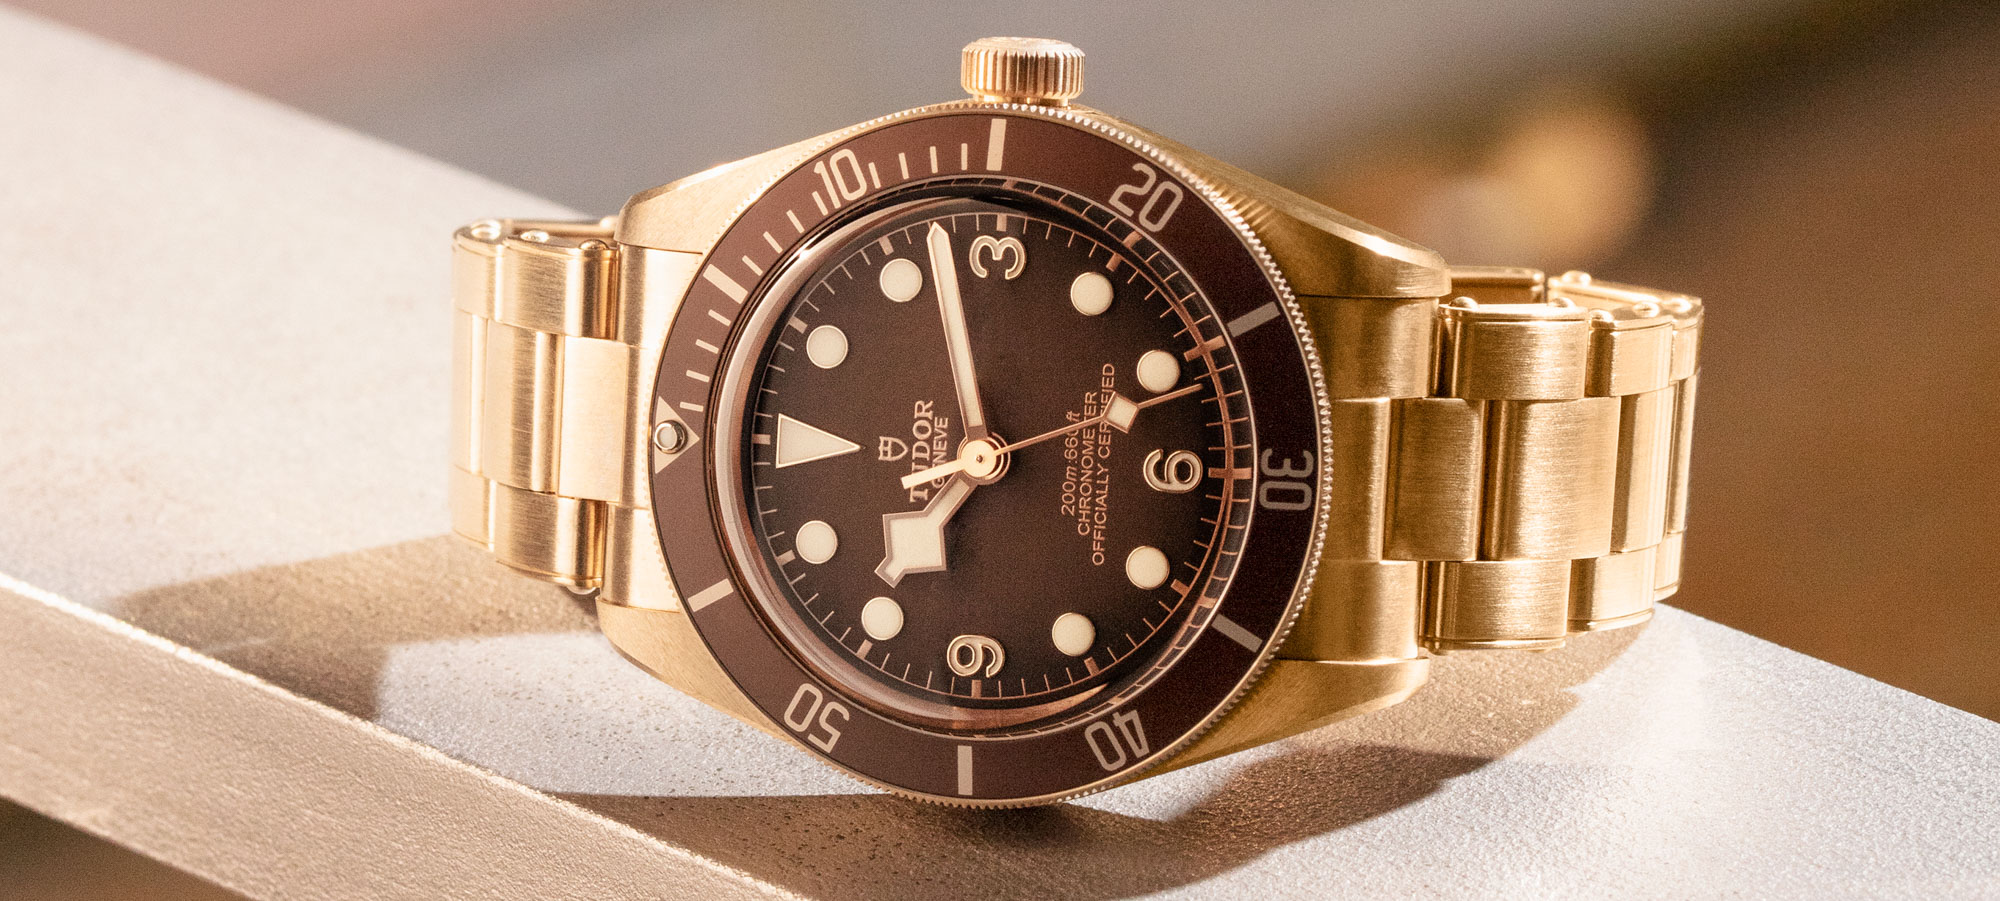 Tudor Black Bronze Watch With New Adjustment | aBlogtoWatch